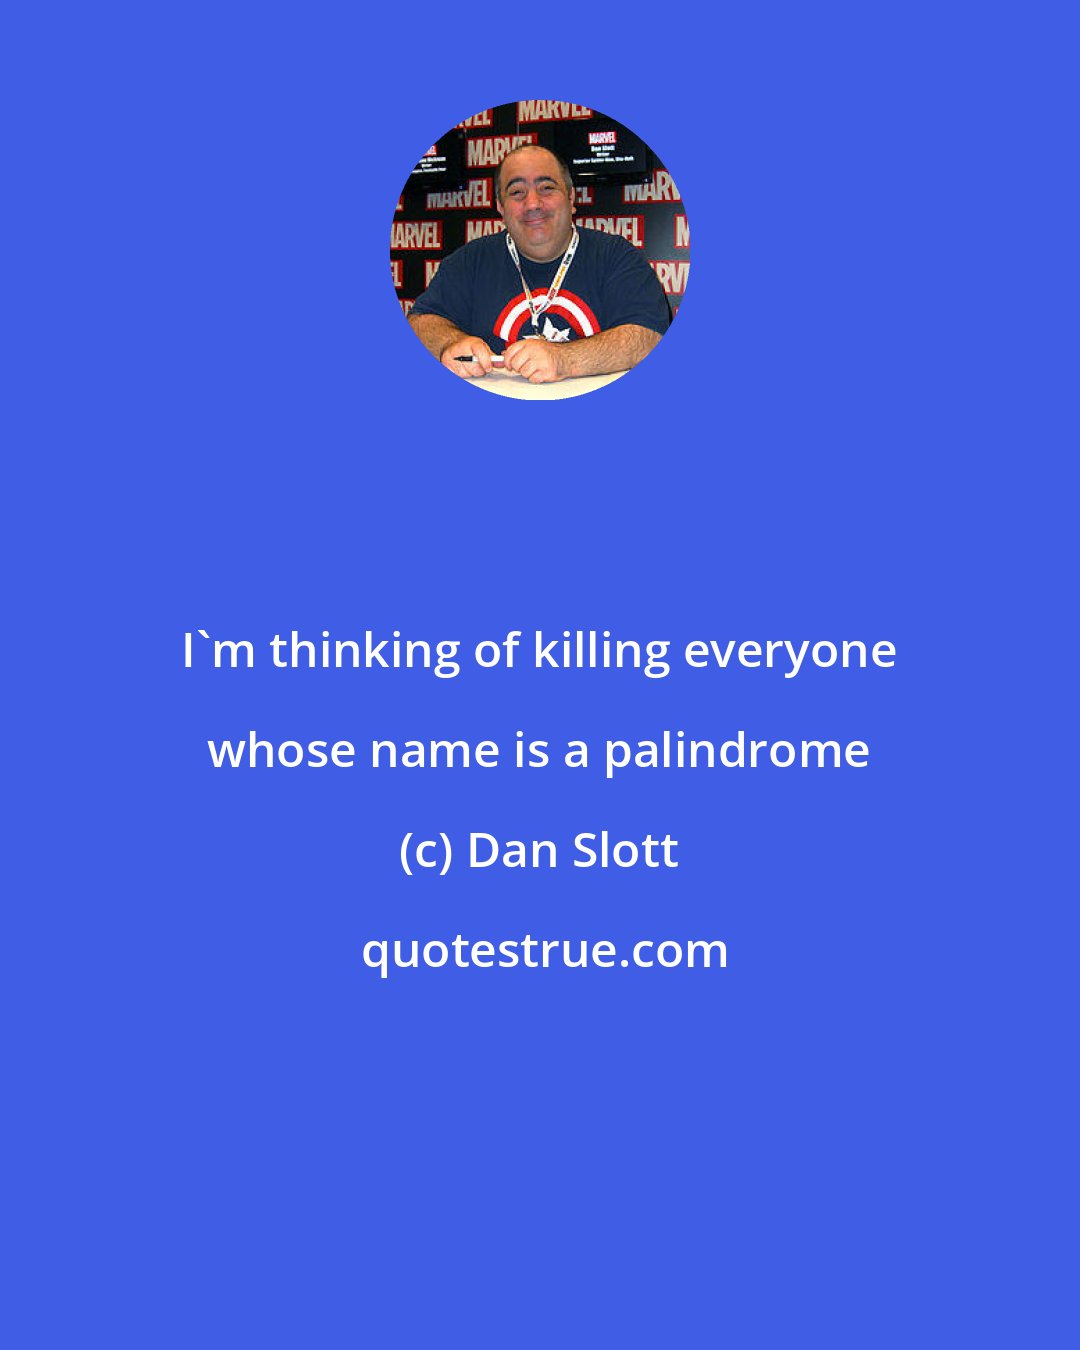 Dan Slott: I'm thinking of killing everyone whose name is a palindrome